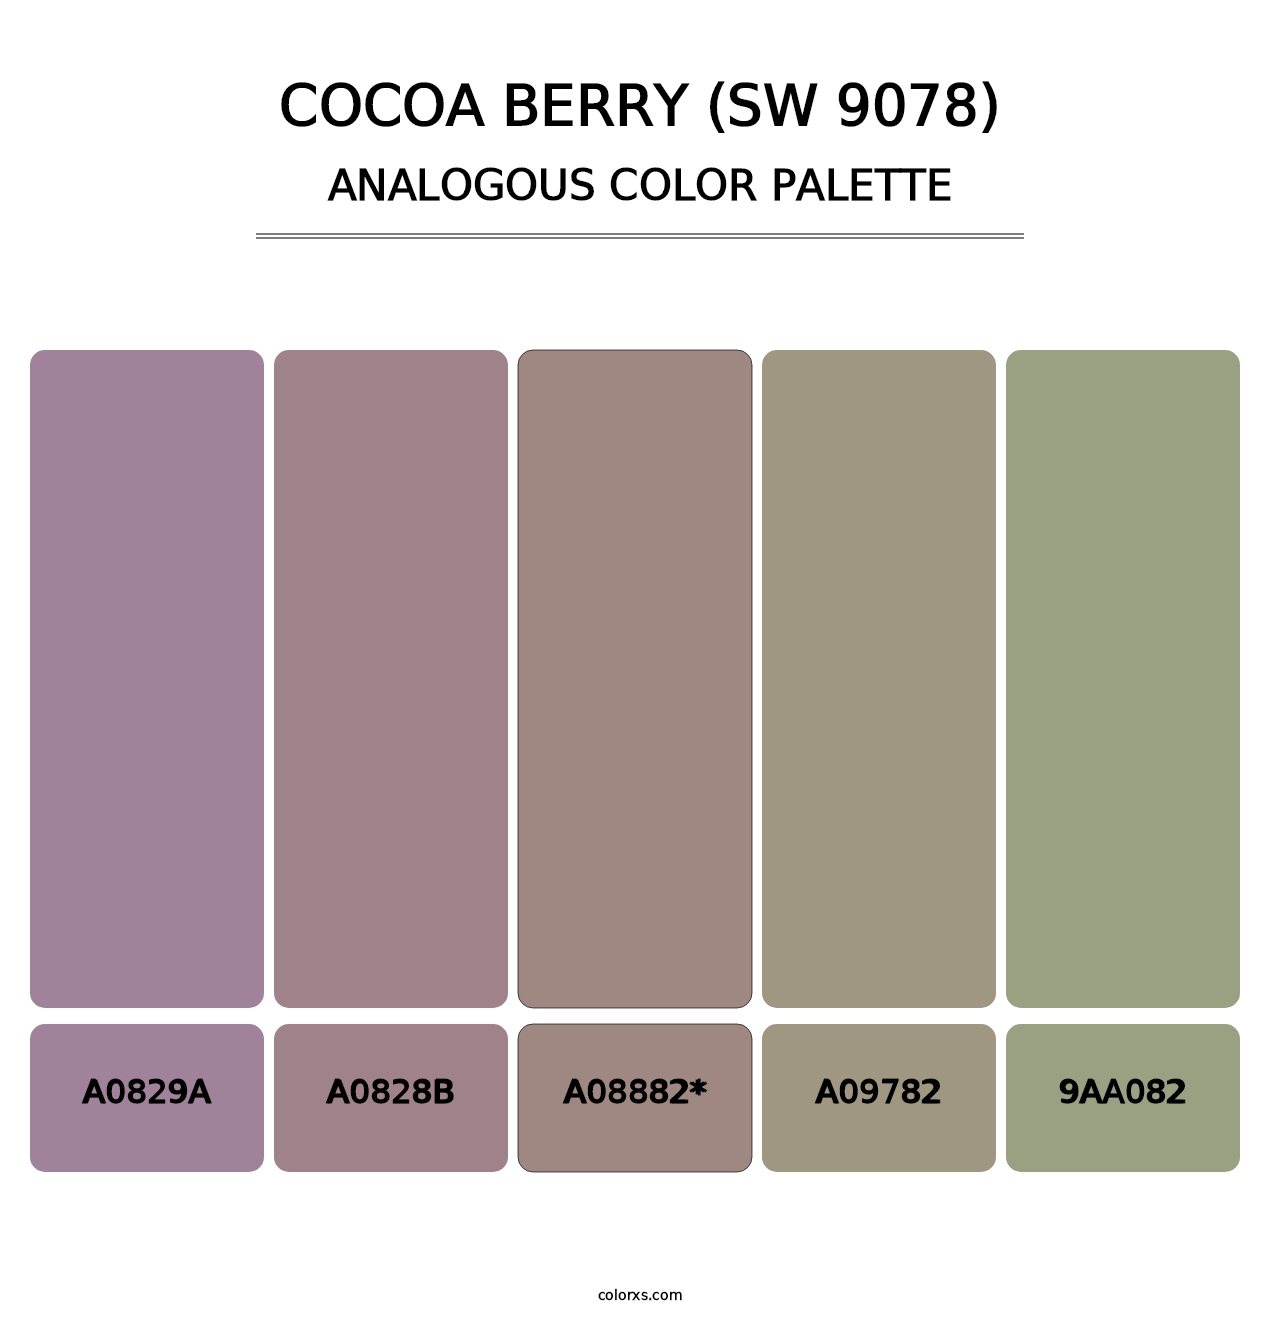 Cocoa Berry (SW 9078) - Analogous Color Palette